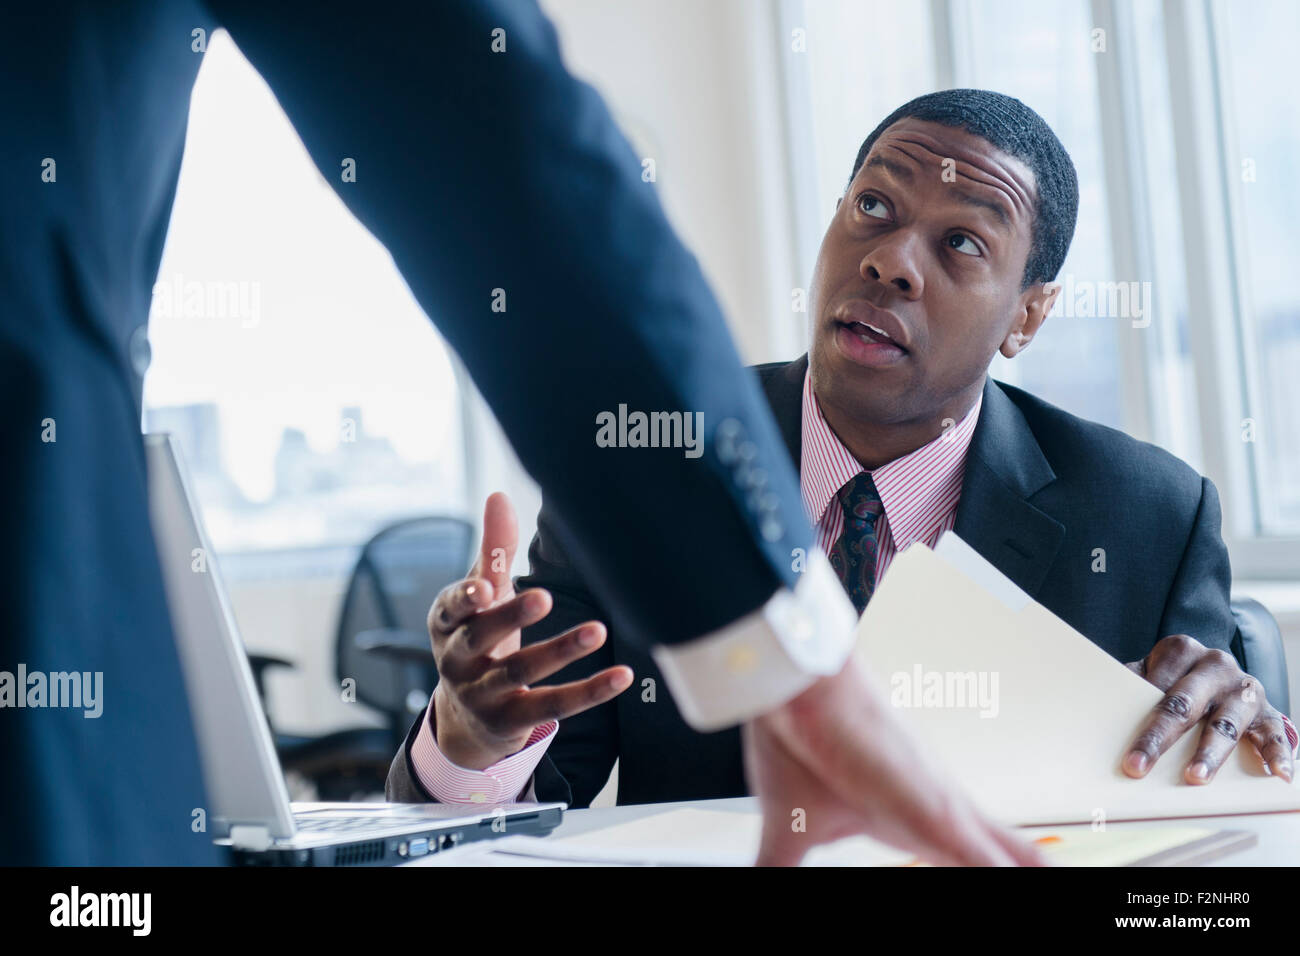 Businessmen talking at desk in office Stock Photo